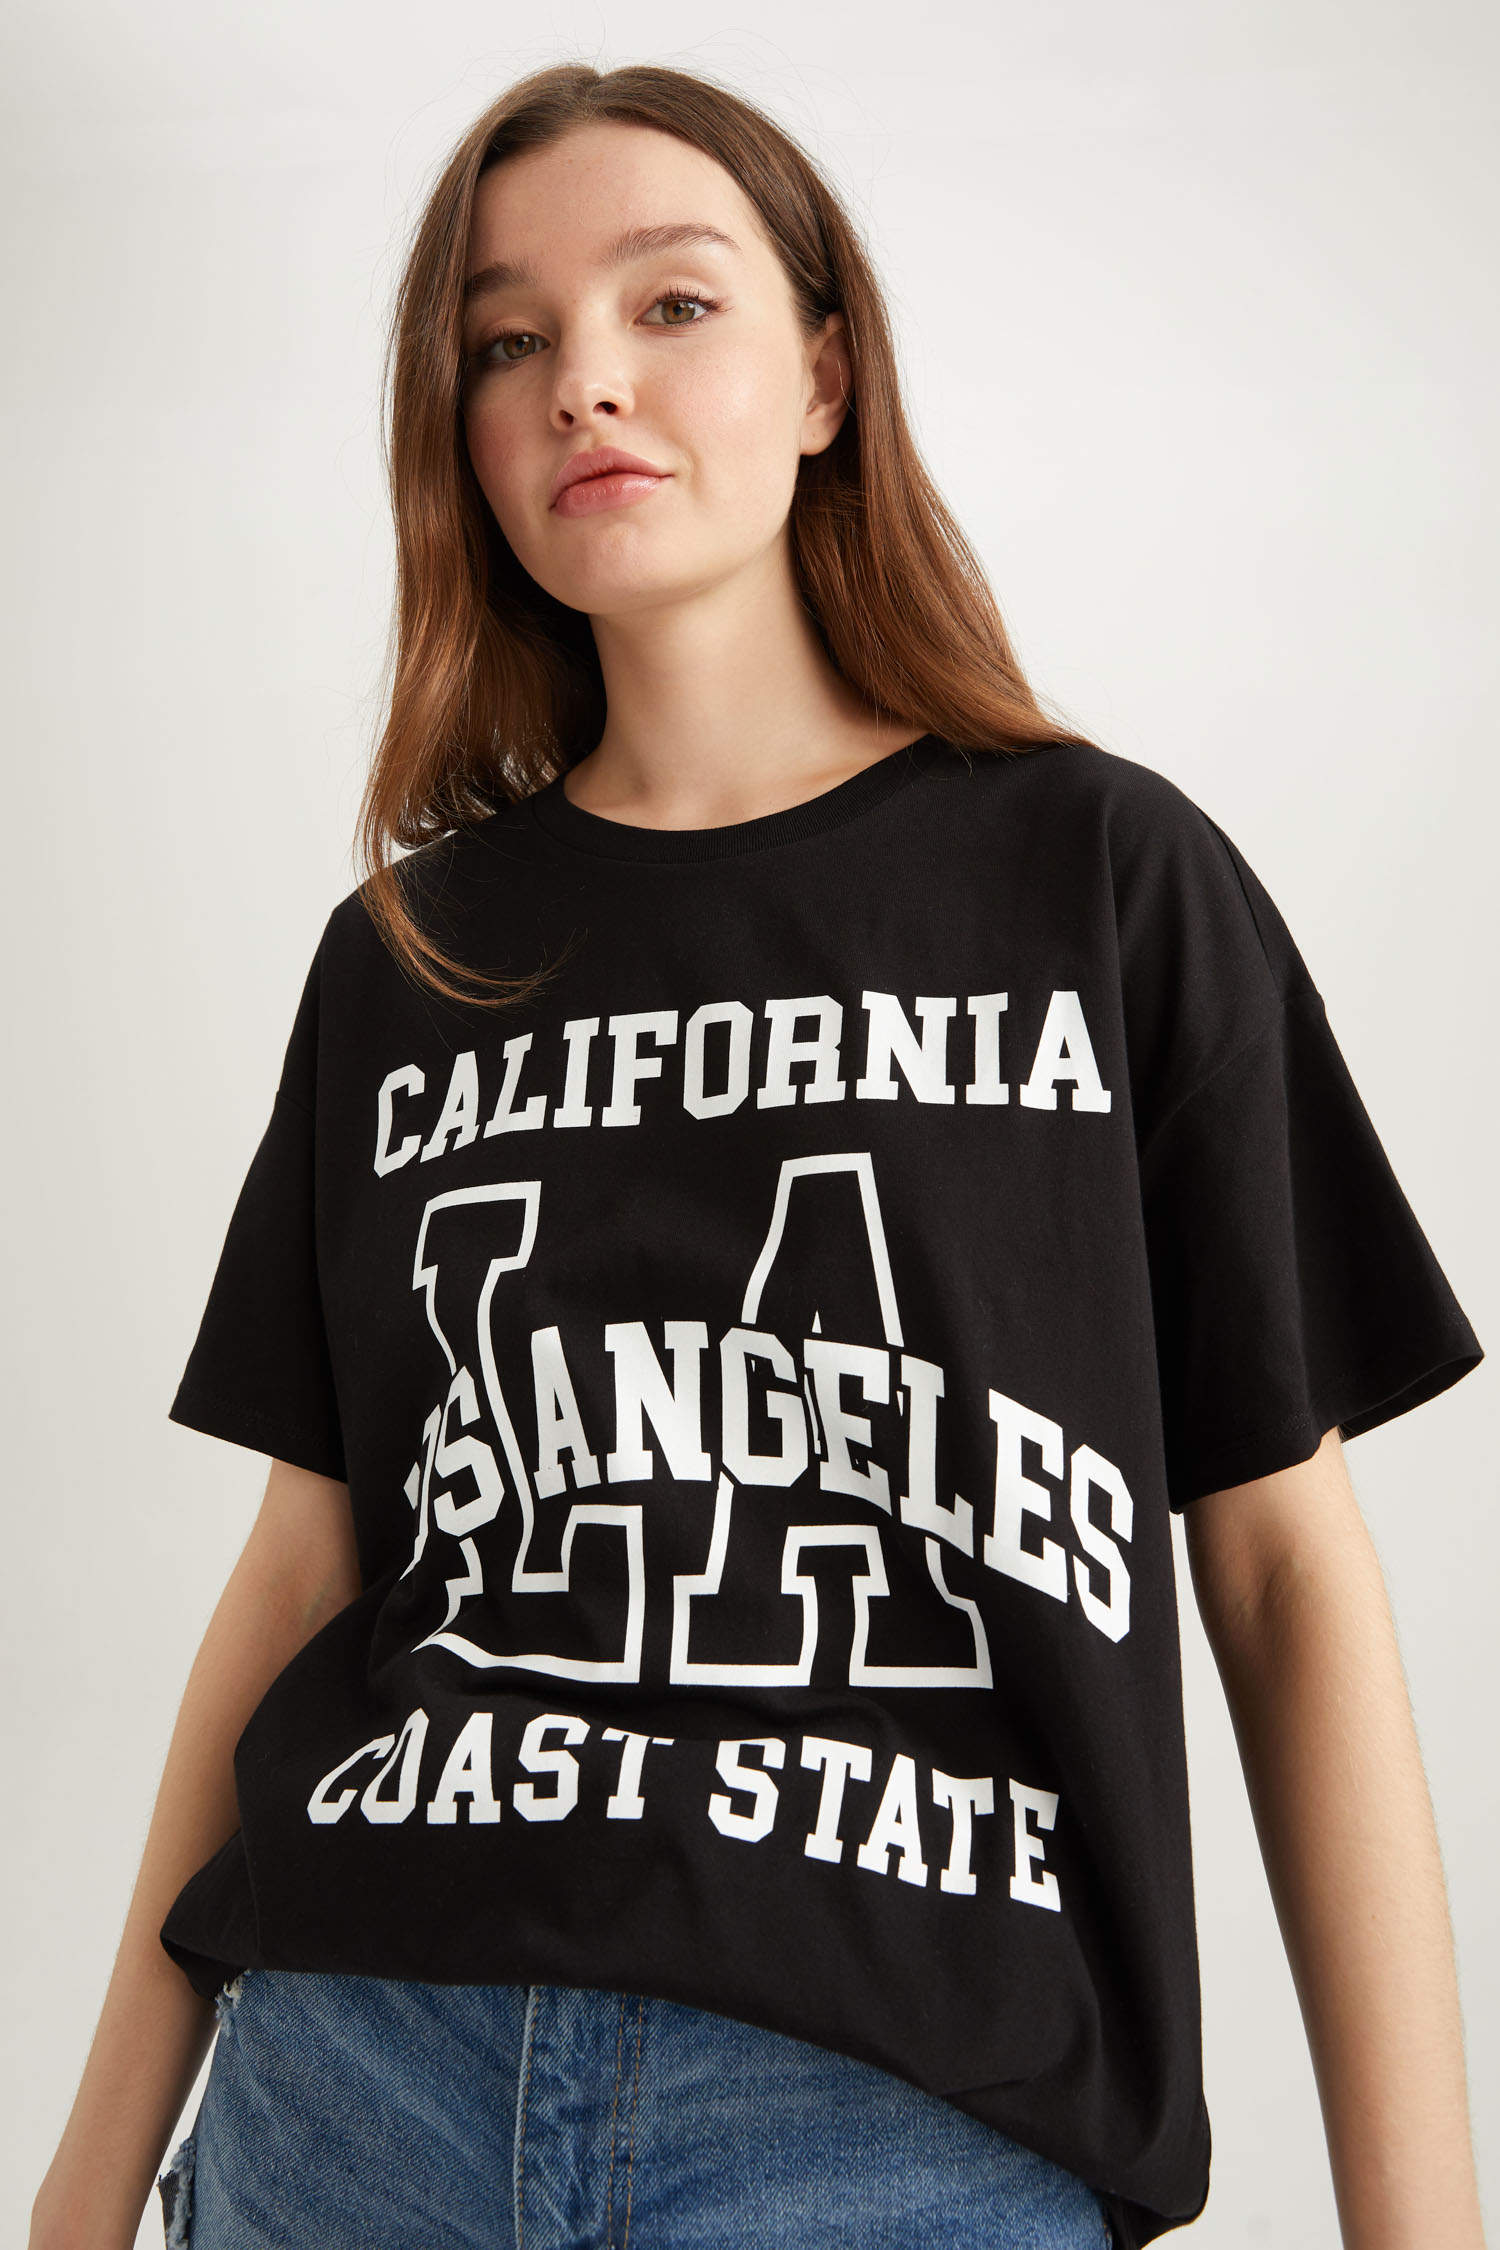 Los Angeles Oversized Shirt, Shirt Womens Oversize Angeles